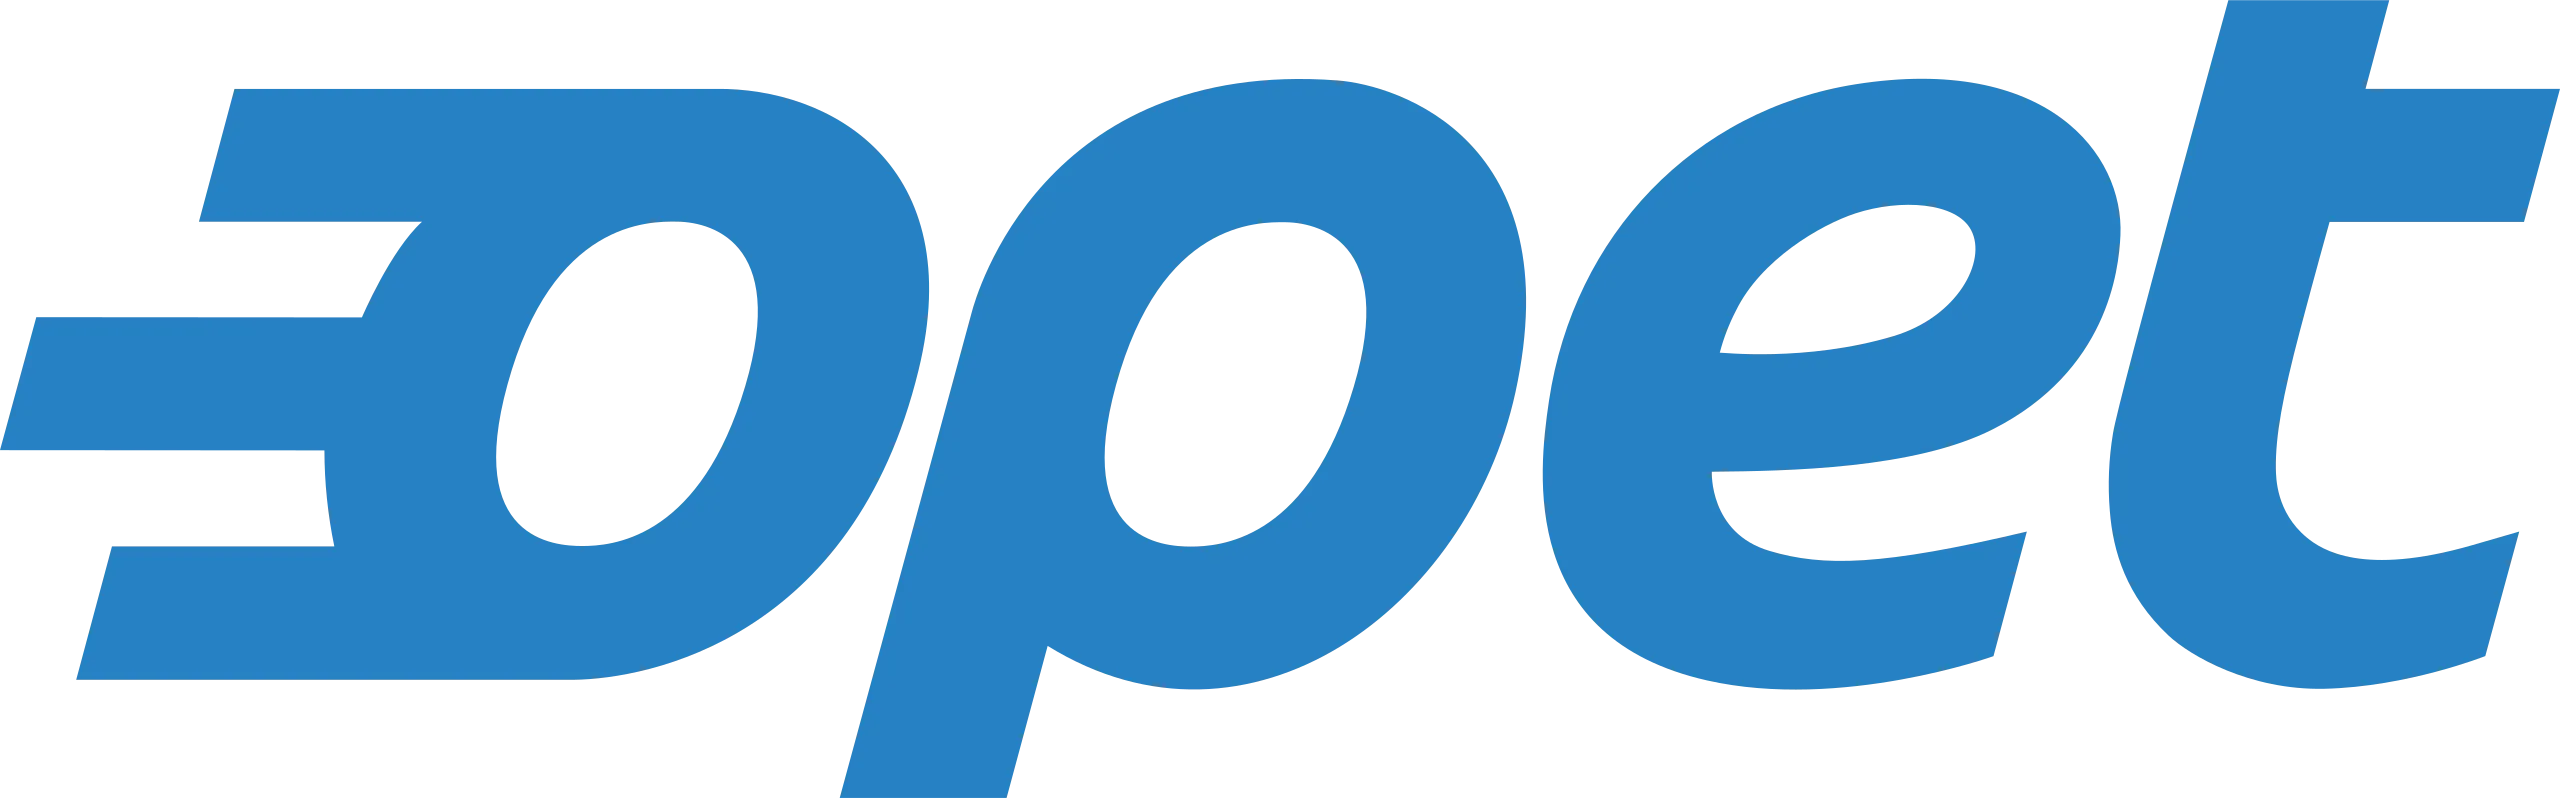 Opet_logo.png